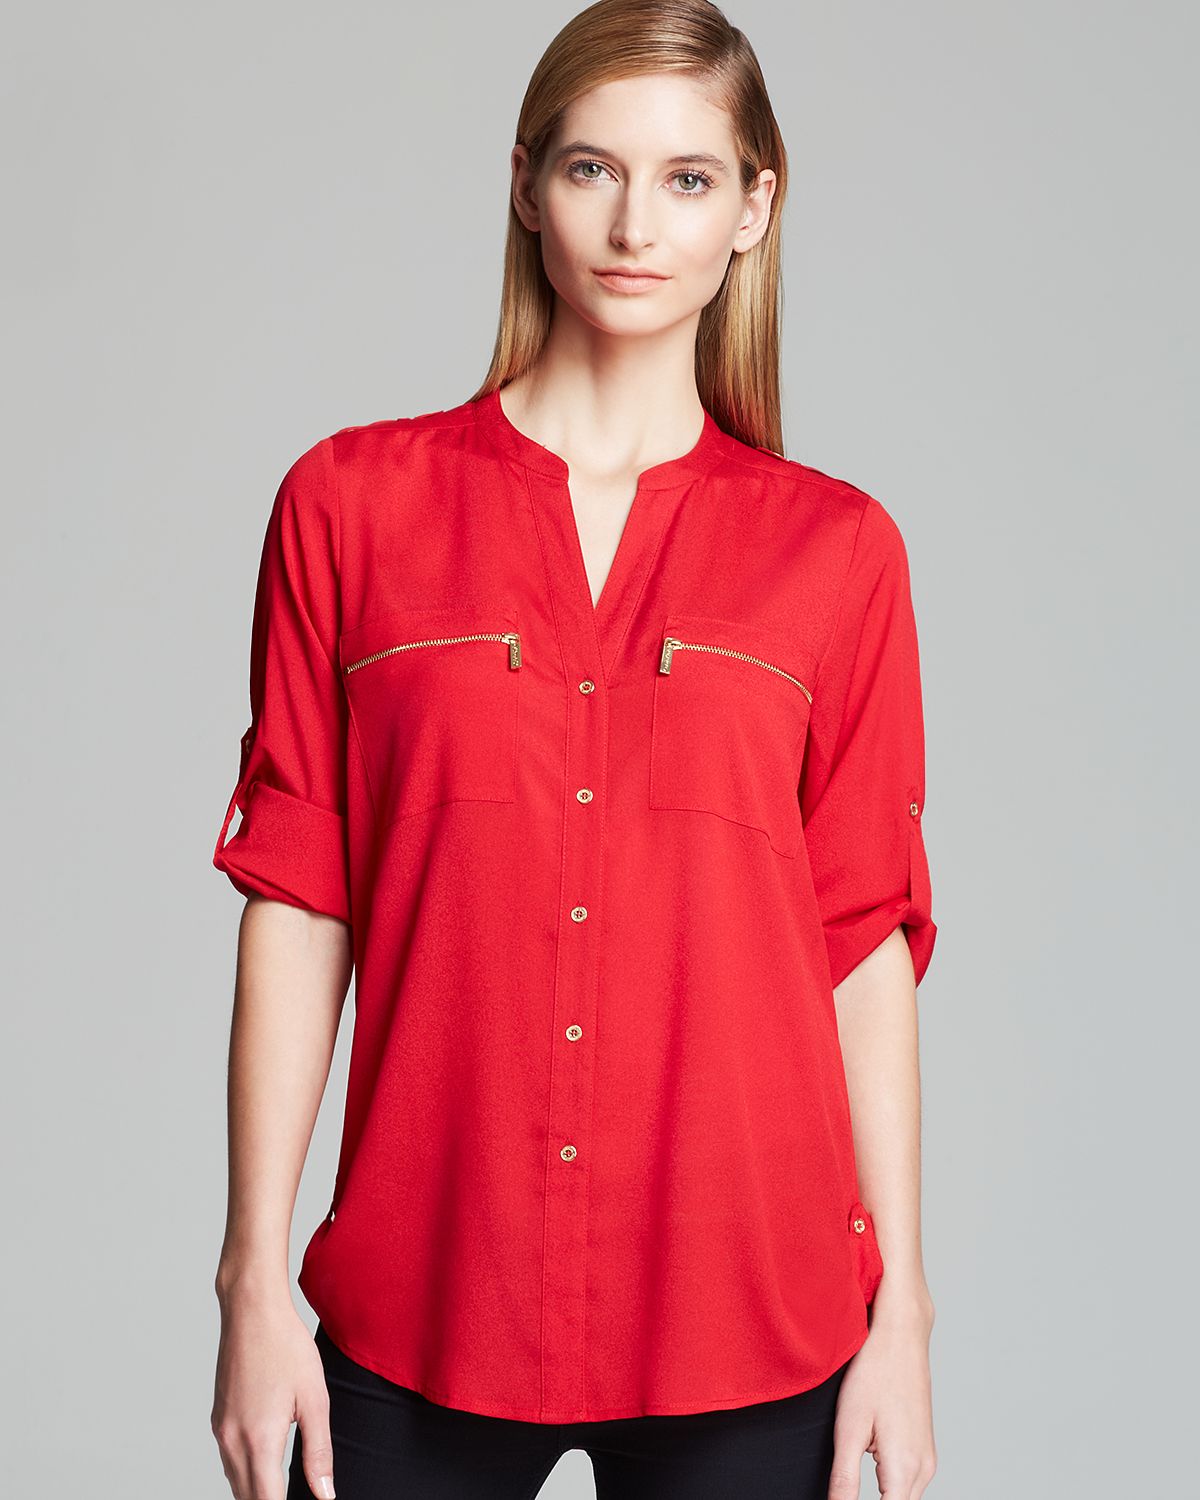 Lyst - Calvin Klein Zip Pocket Roll Sleeve Shirt in Red